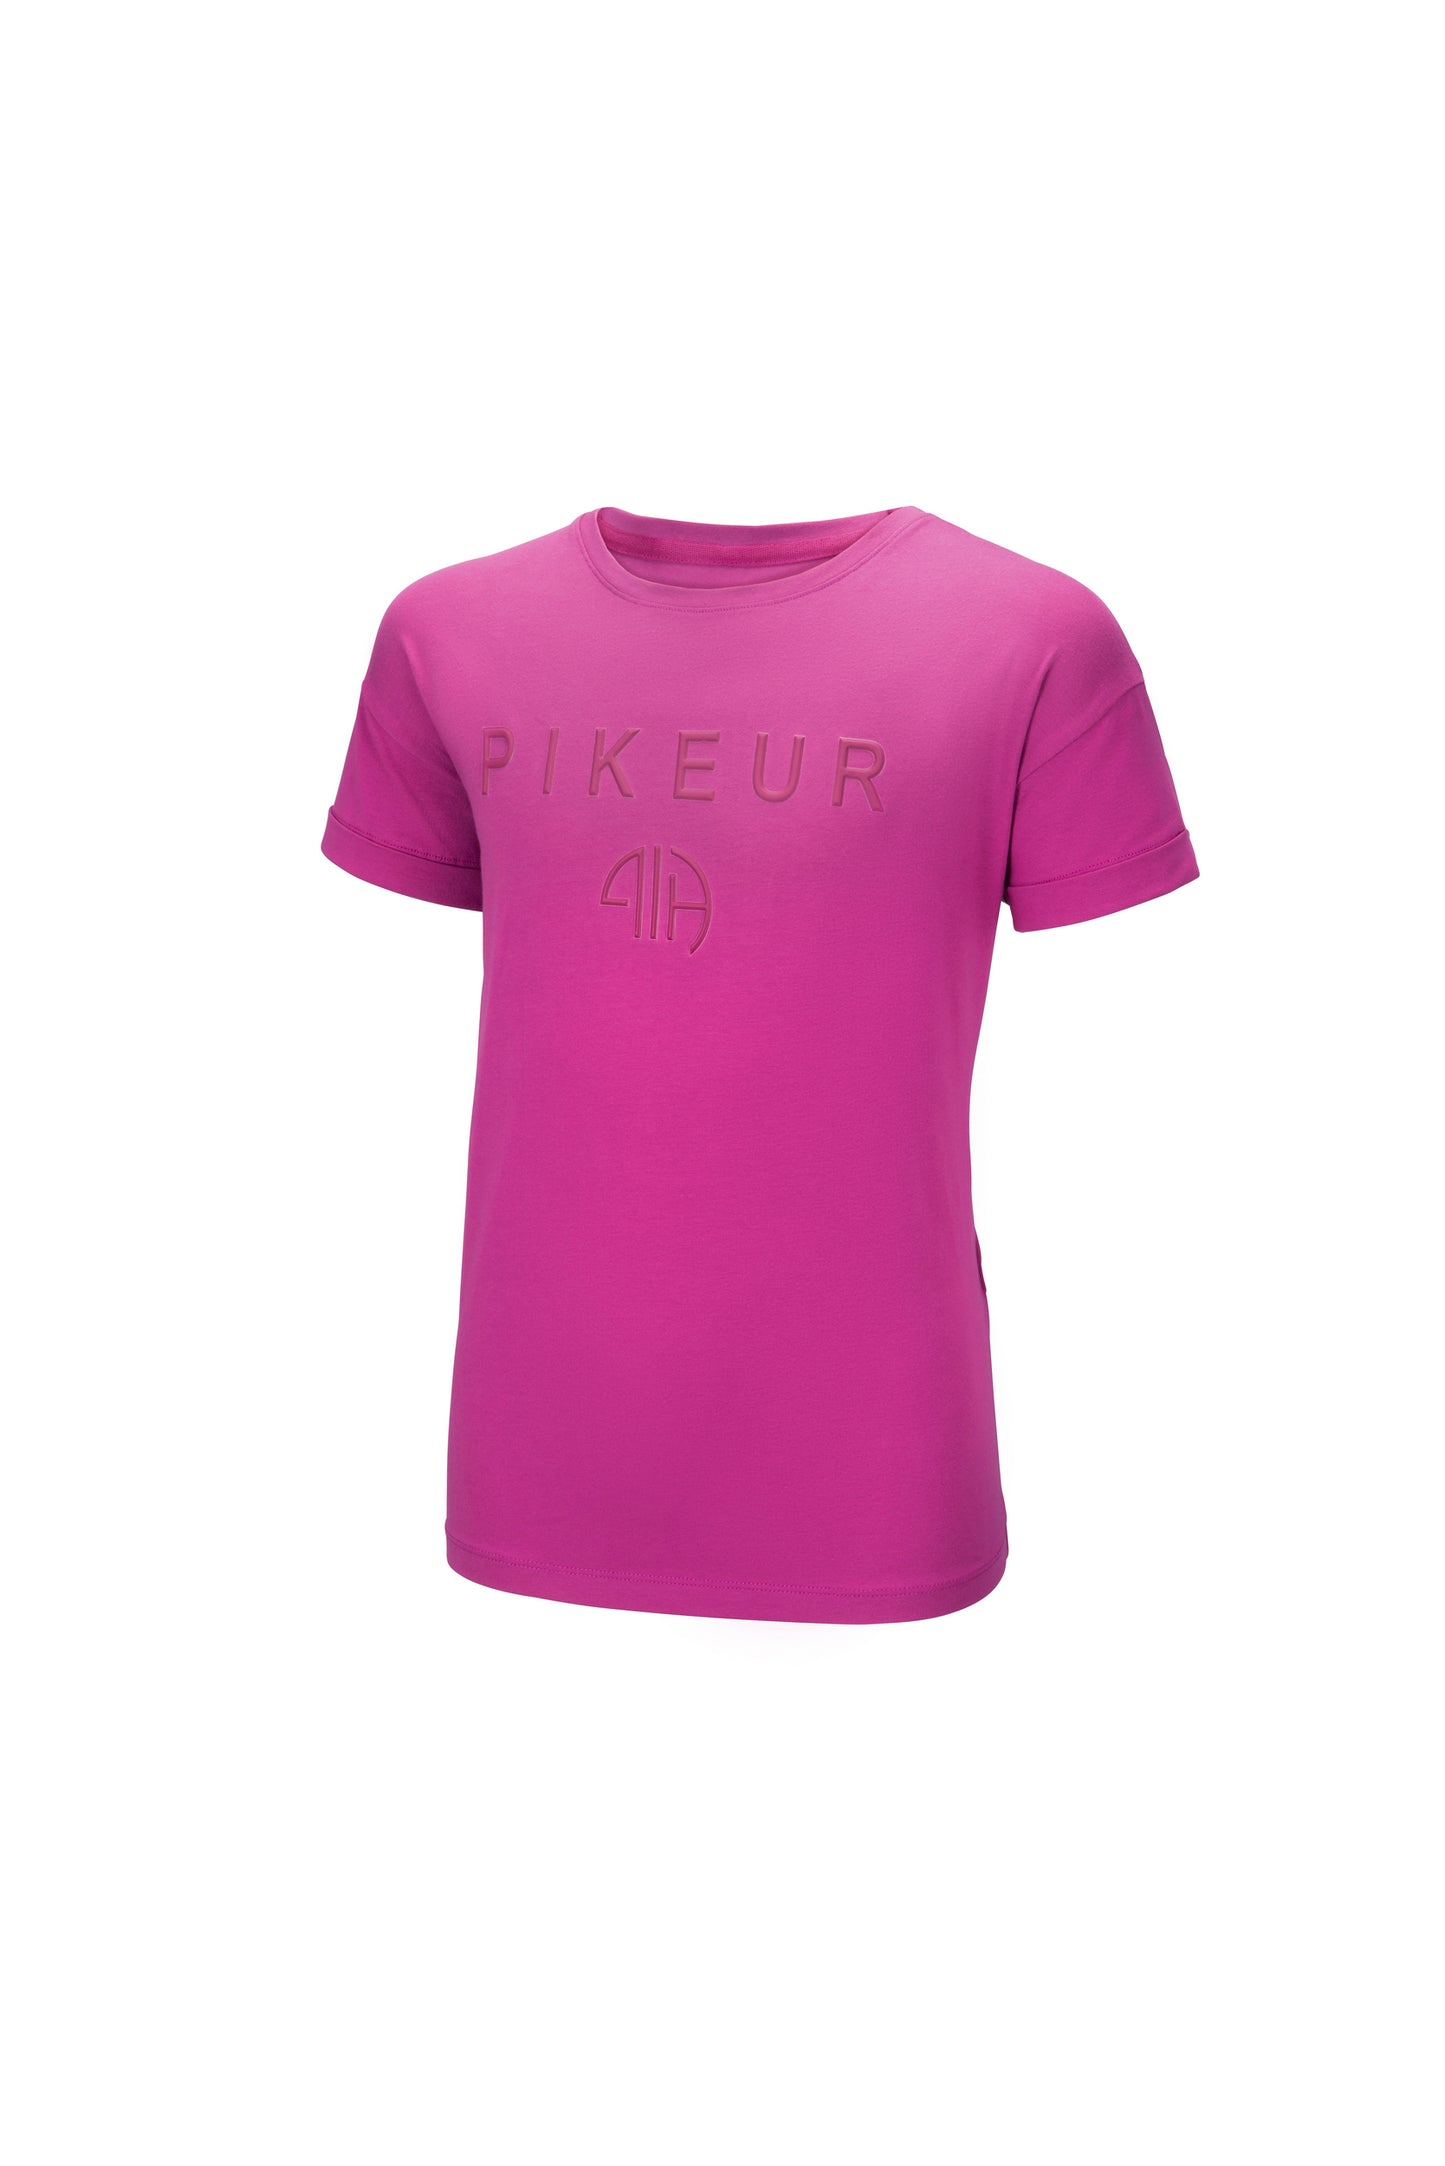 Pikeur Tiene T Shirt - Hot Pink